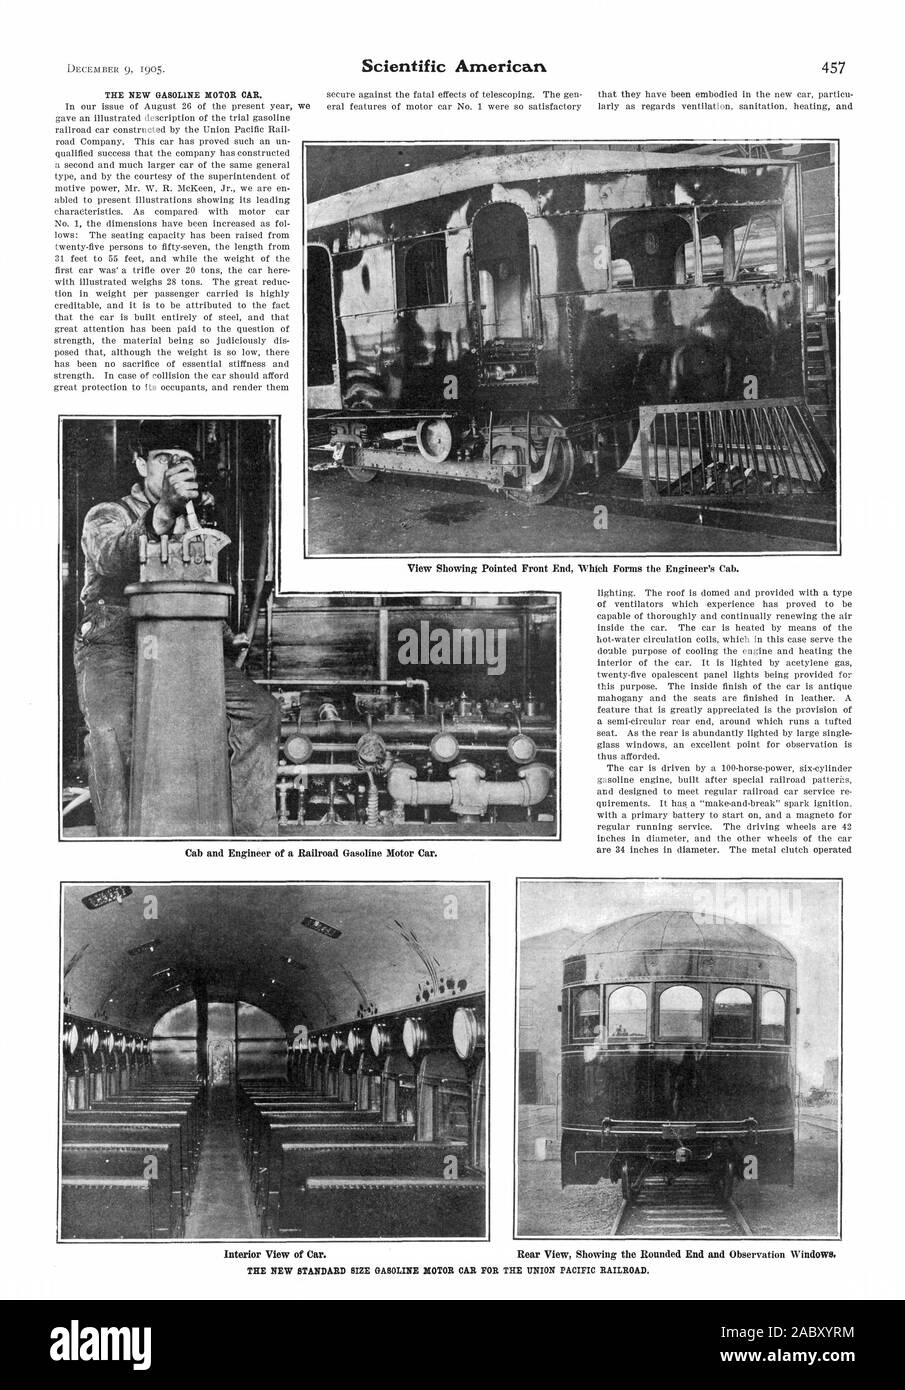 THE NEW GASOLINE MOTOR OAR., scientific american, 1905-12-09 Stock Photo